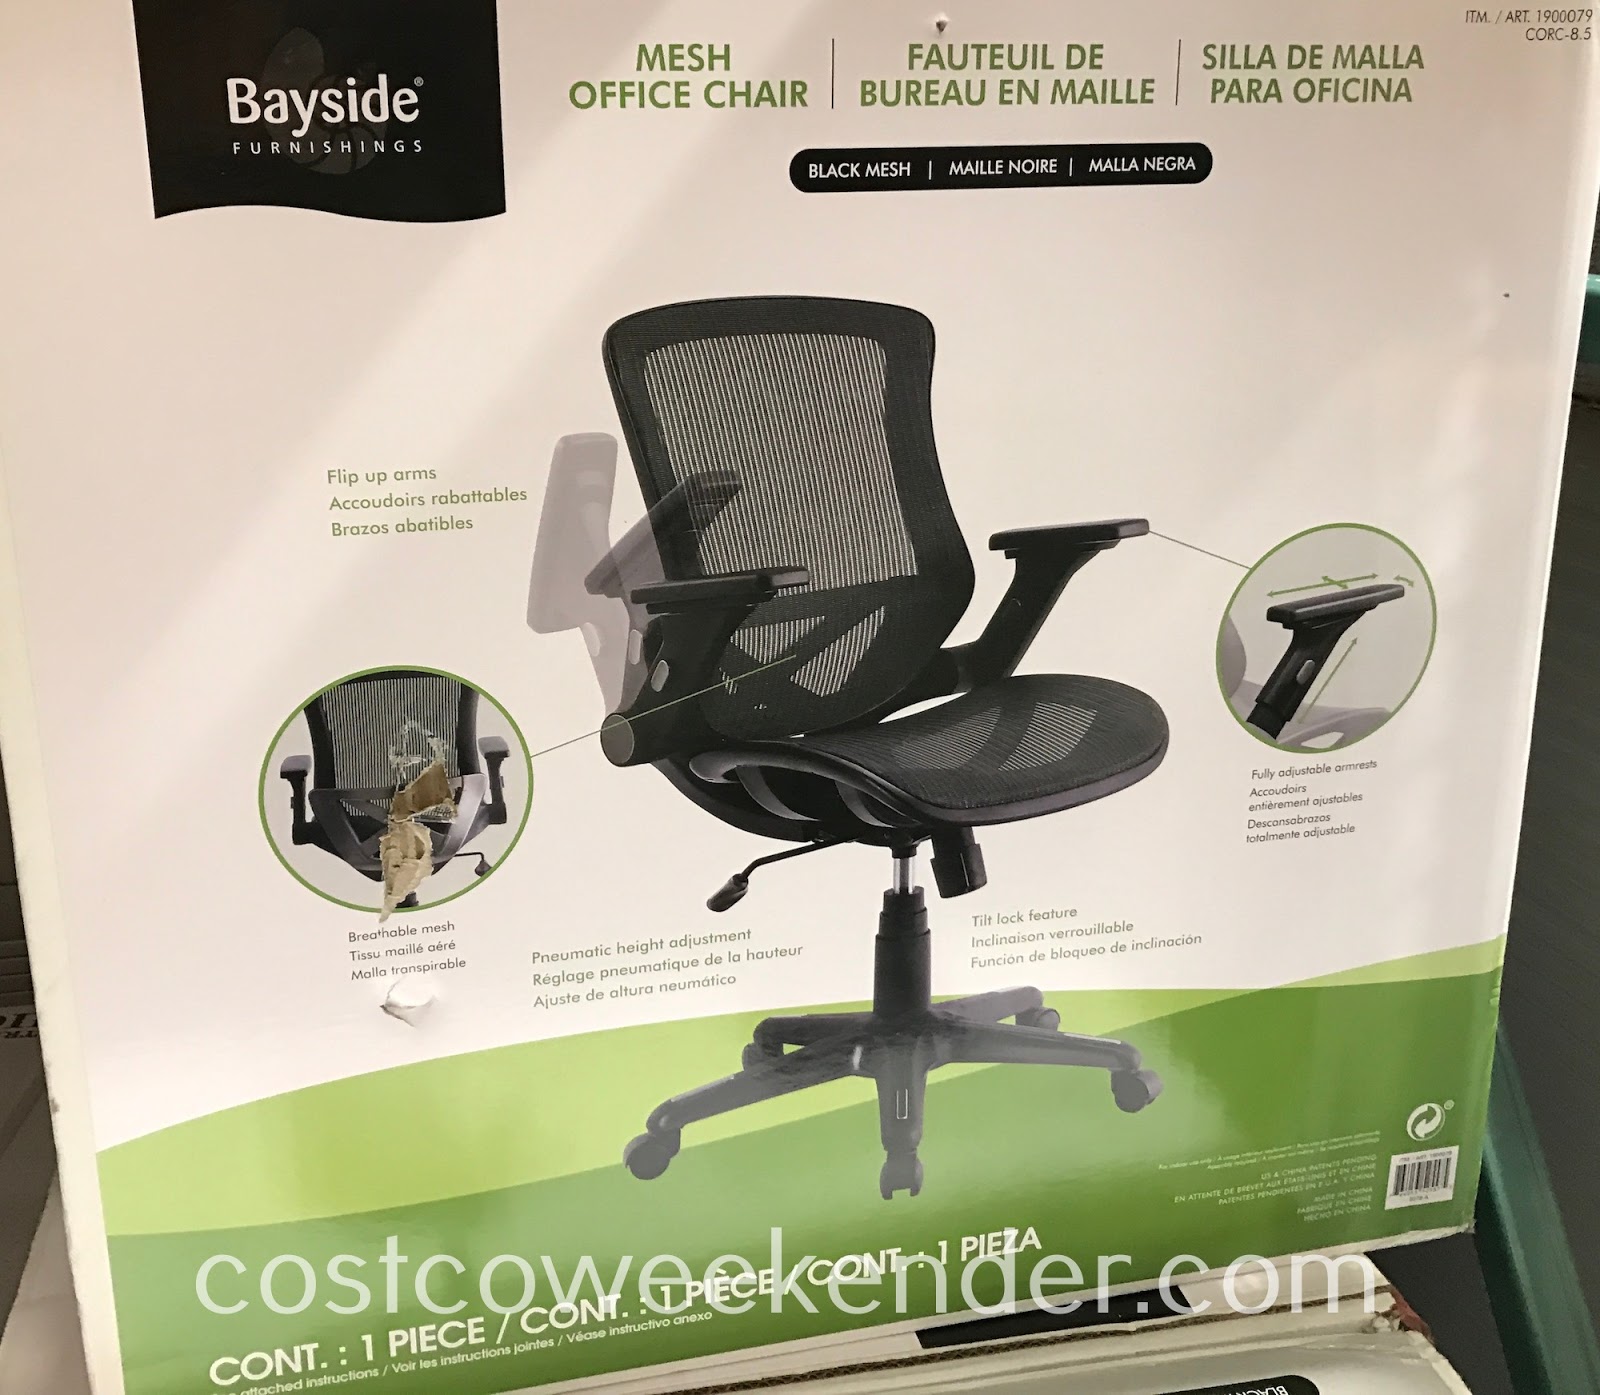 Costco Bayside Furnishings Mesh Office Chair 1900079 